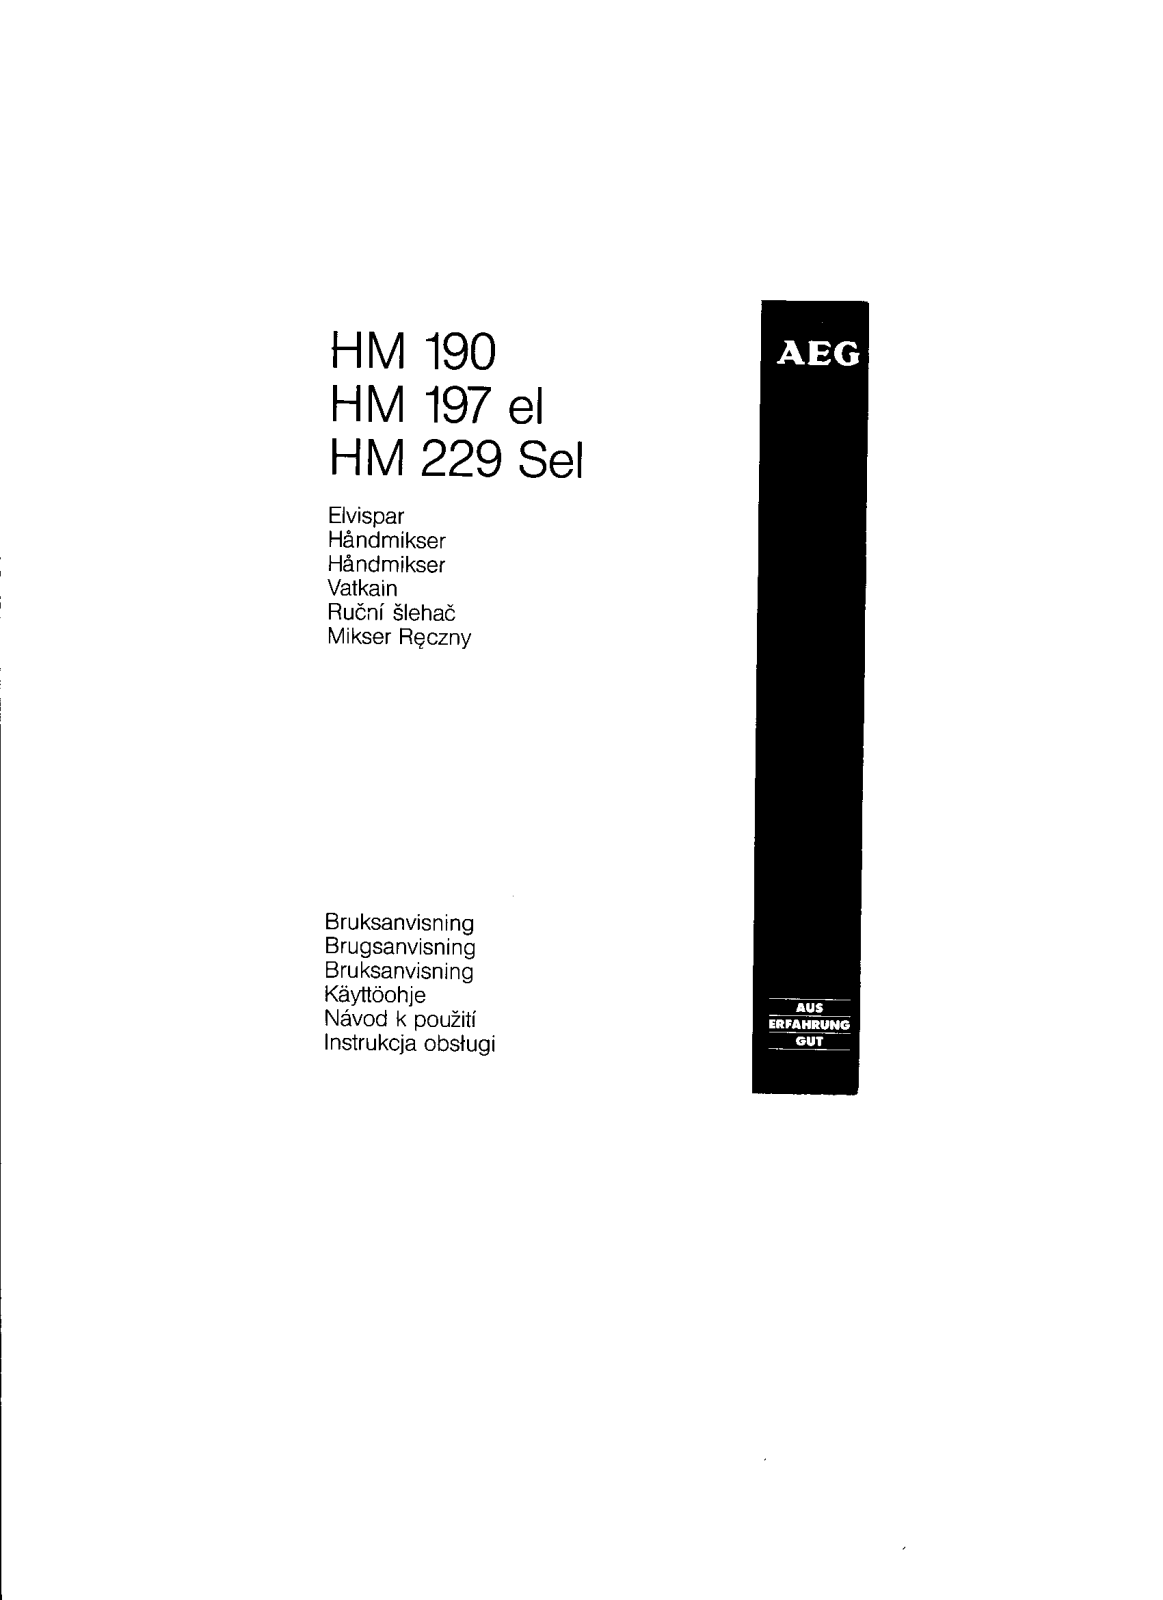 AEG HM190 Manual